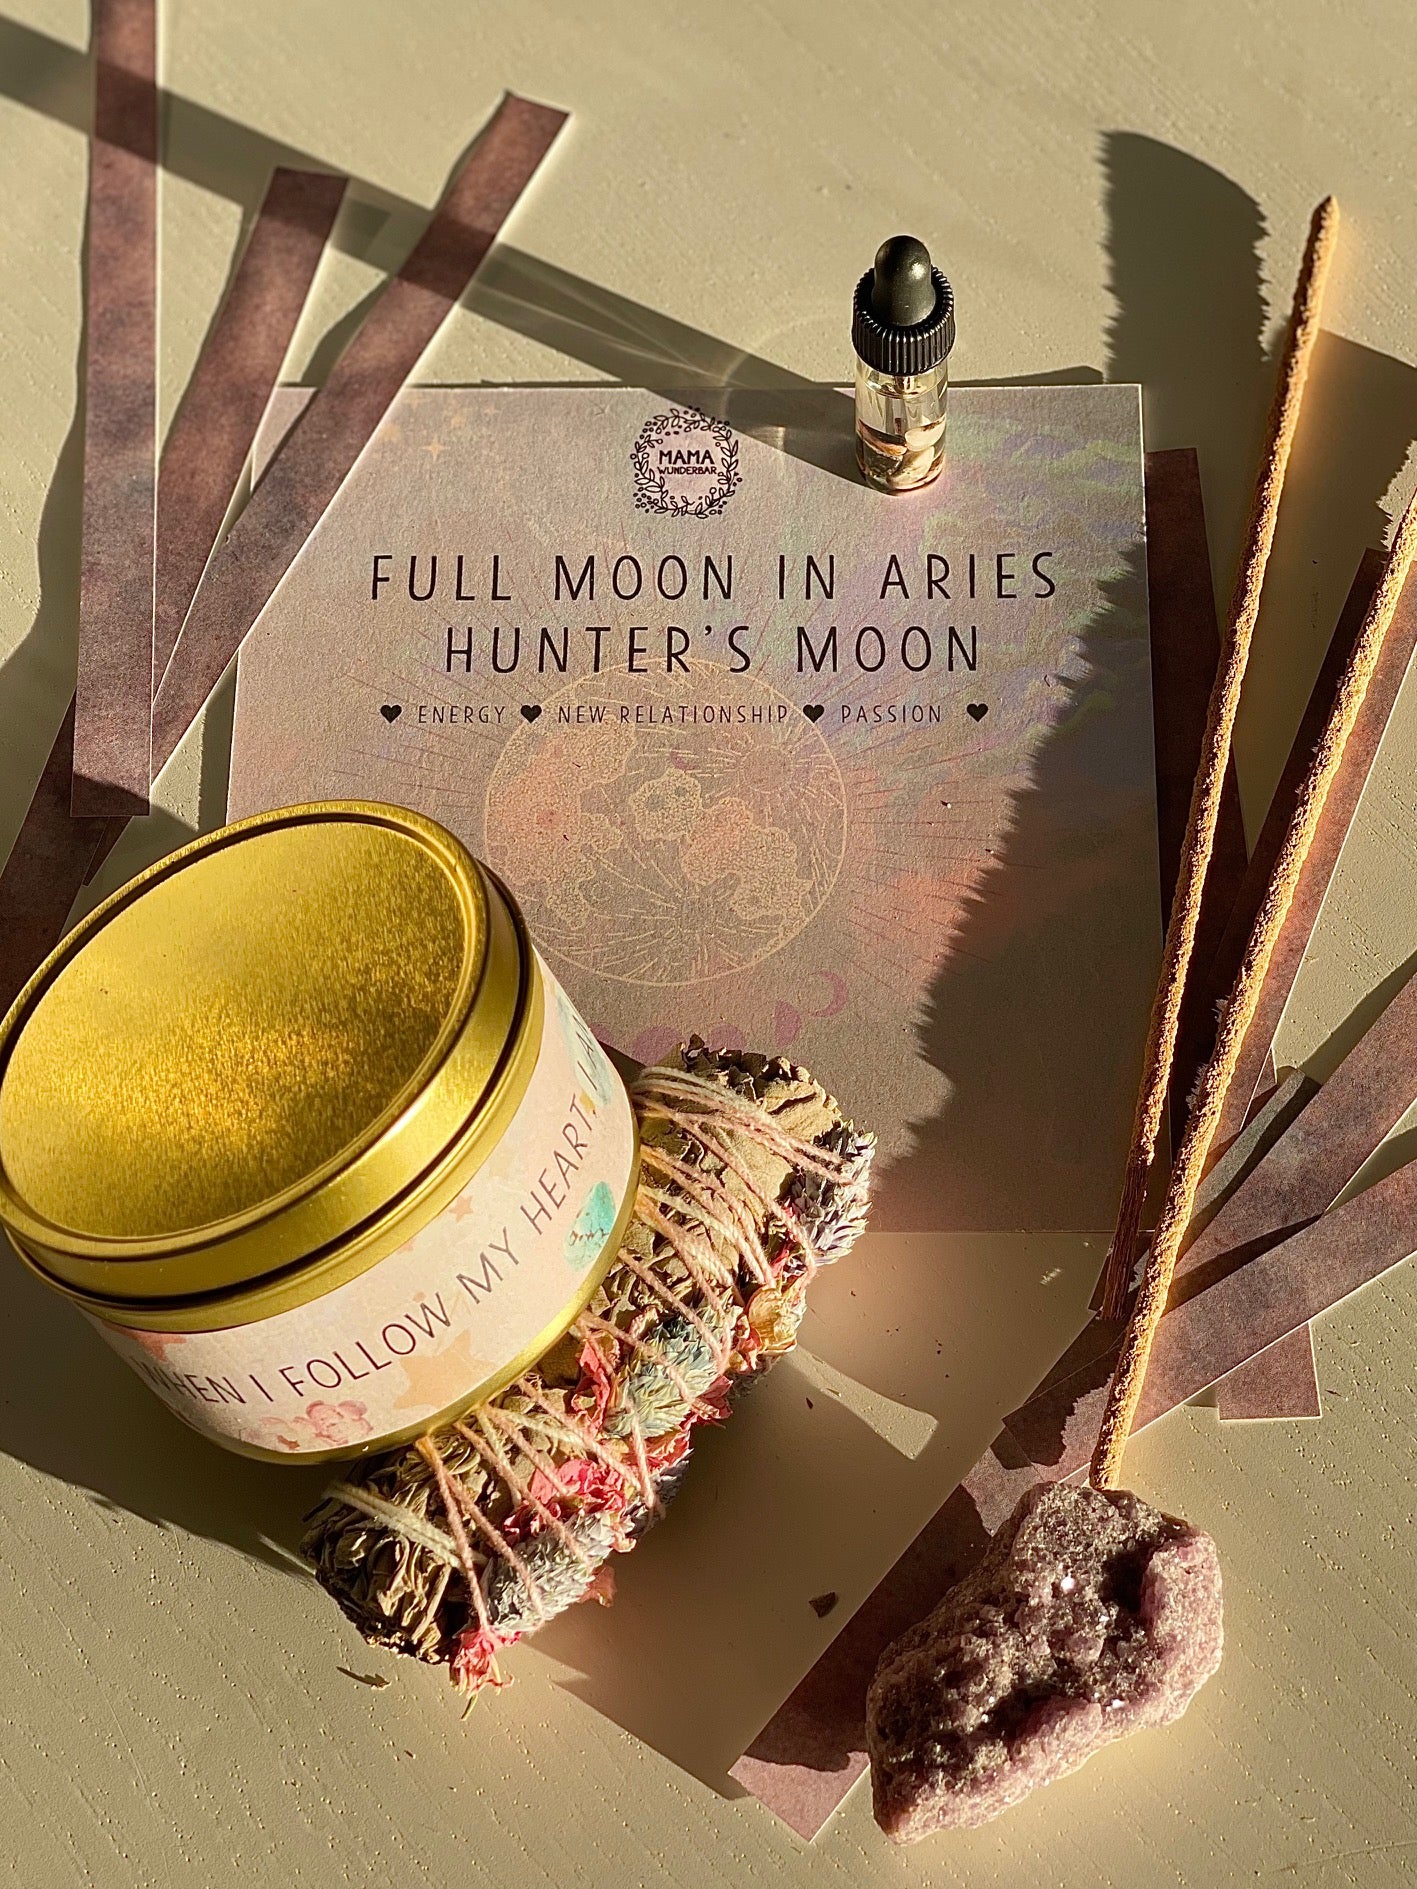 Full Moon Ritual kit — Primrose apothecary